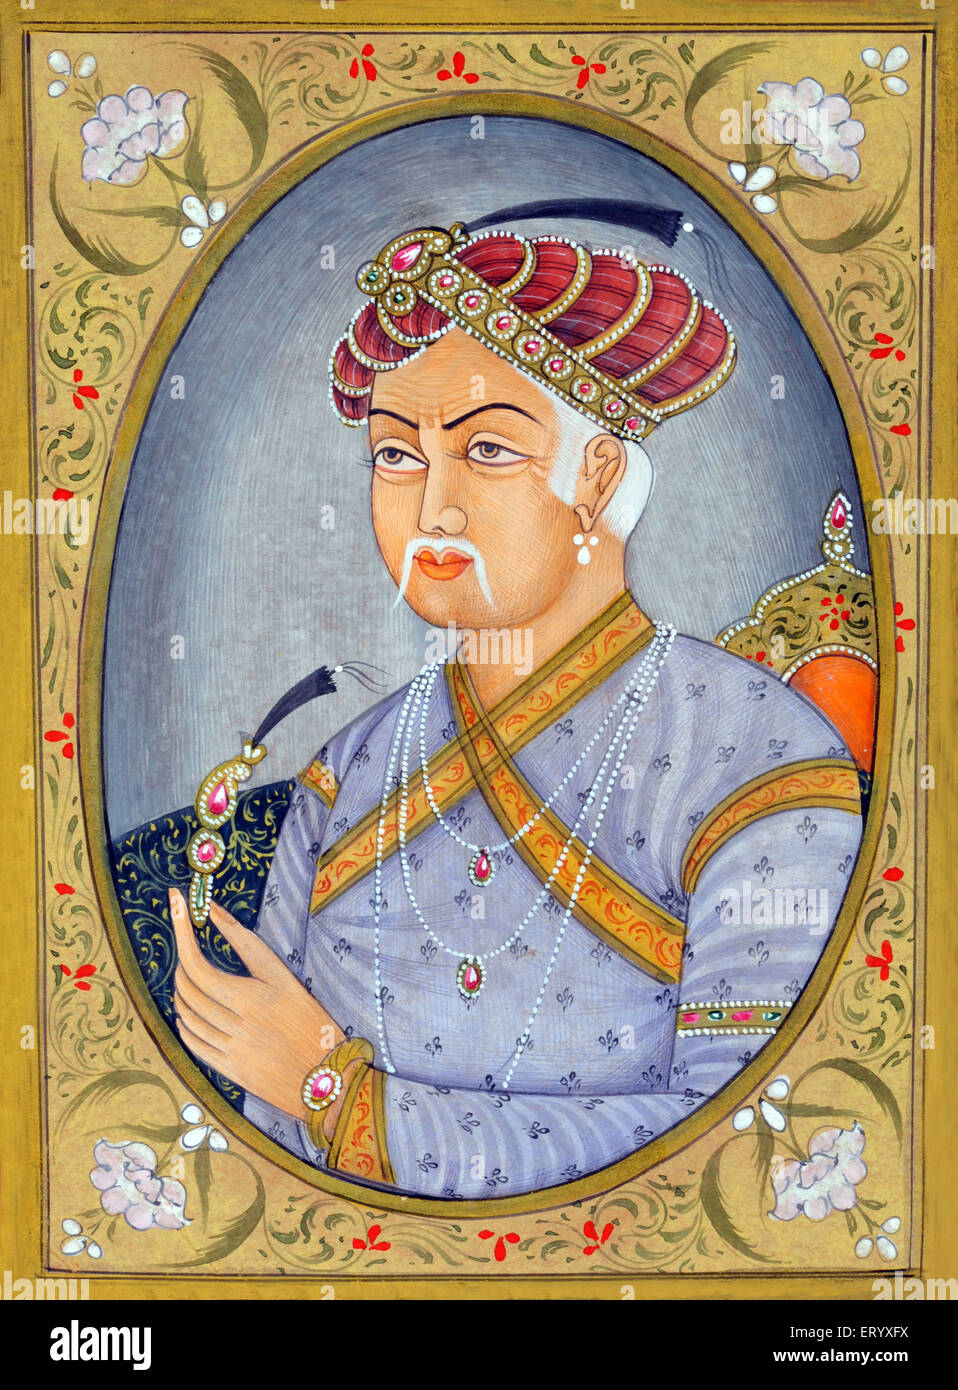 Akbar sitzt auf dem Thron trägt Turban Halskette Mogul-Kaiser Miniaturbild Indien indischen Raja König Maharaja Stockfoto